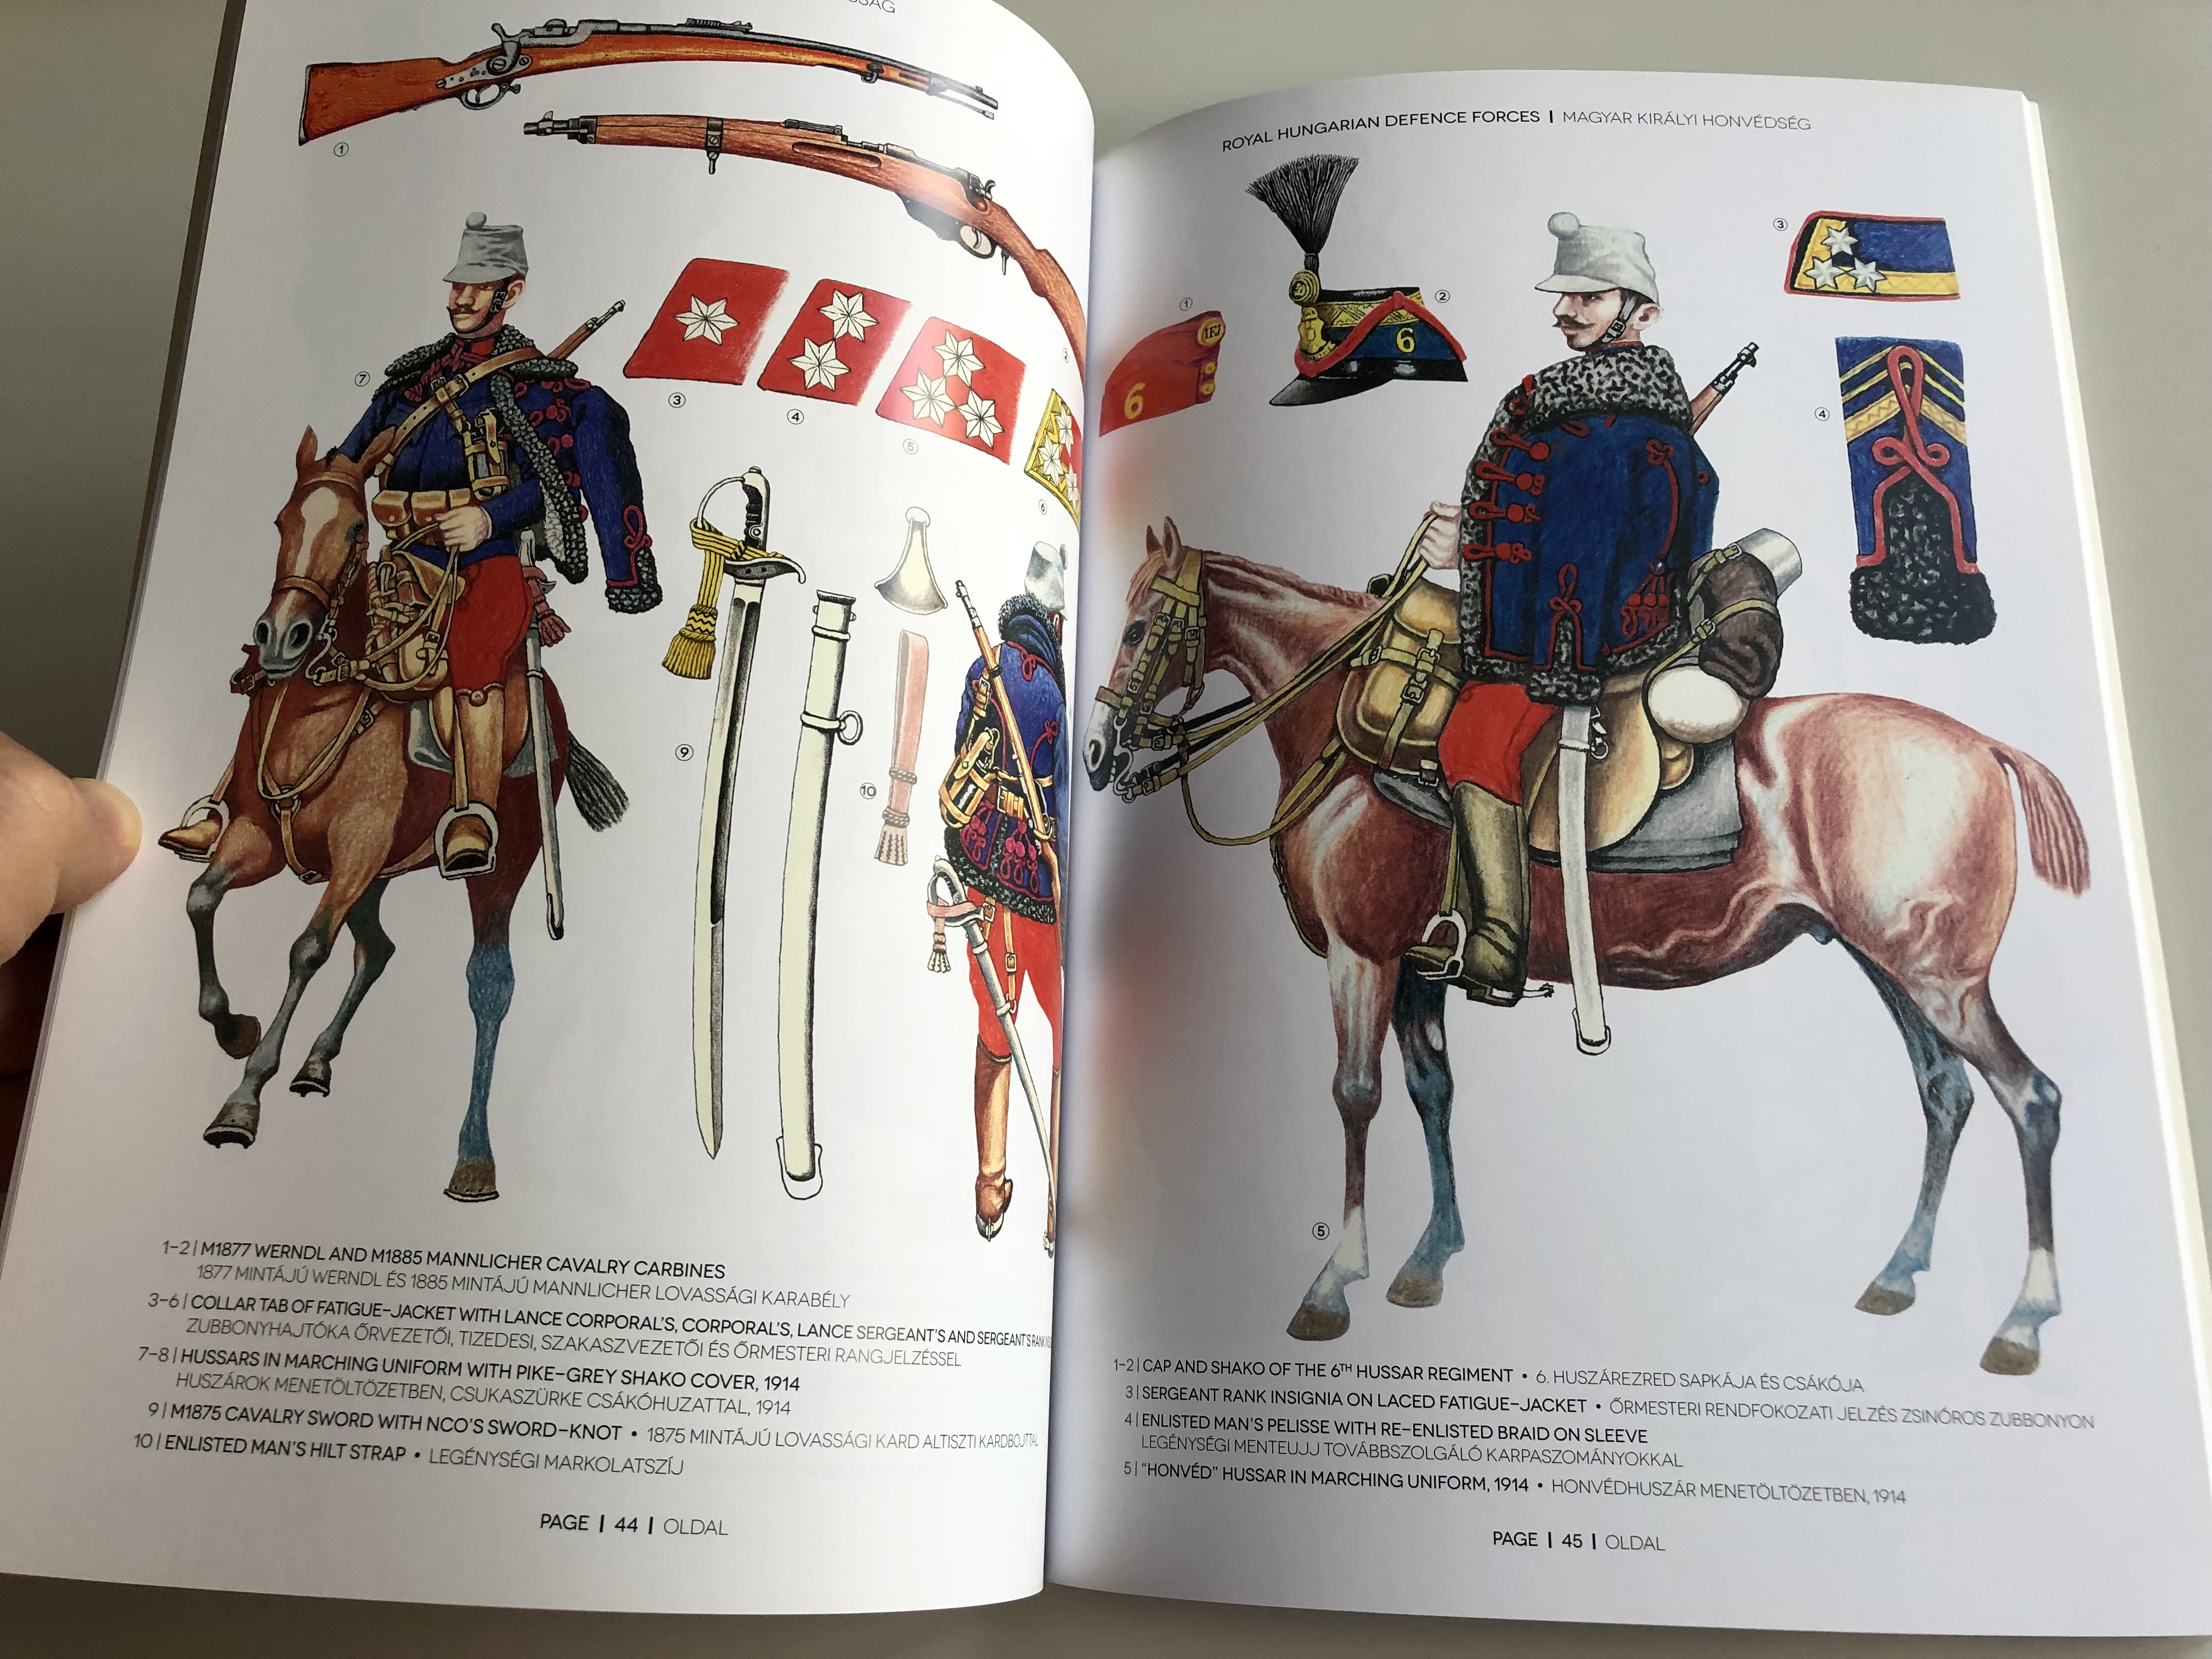 royal-hungarian-defence-forces-1868-1914-by-gy-z-somogyi-magyar-kir-lyi-honv-ds-g-1868-1914-a-millenium-in-the-military-egy-ezred-v-hadban-paperback-2014-hm-zr-nyi-6-.jpg